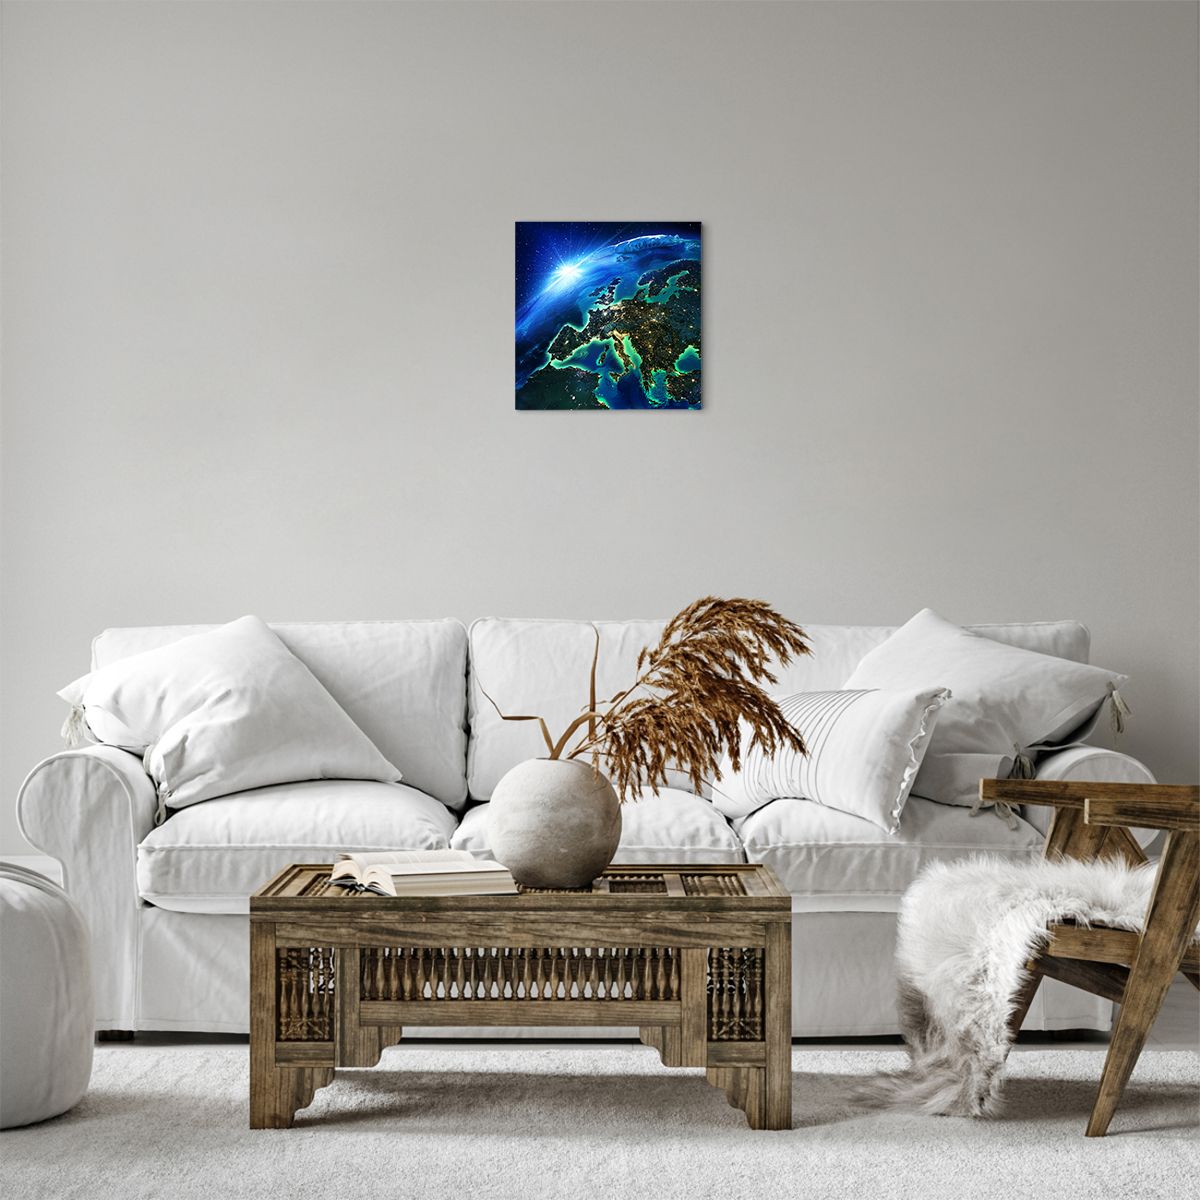 Bild auf Leinwand Kosmos, Bild auf Leinwand Planet Erde, Bild auf Leinwand Kontinente, Bild auf Leinwand Sonne, Bild auf Leinwand 3D